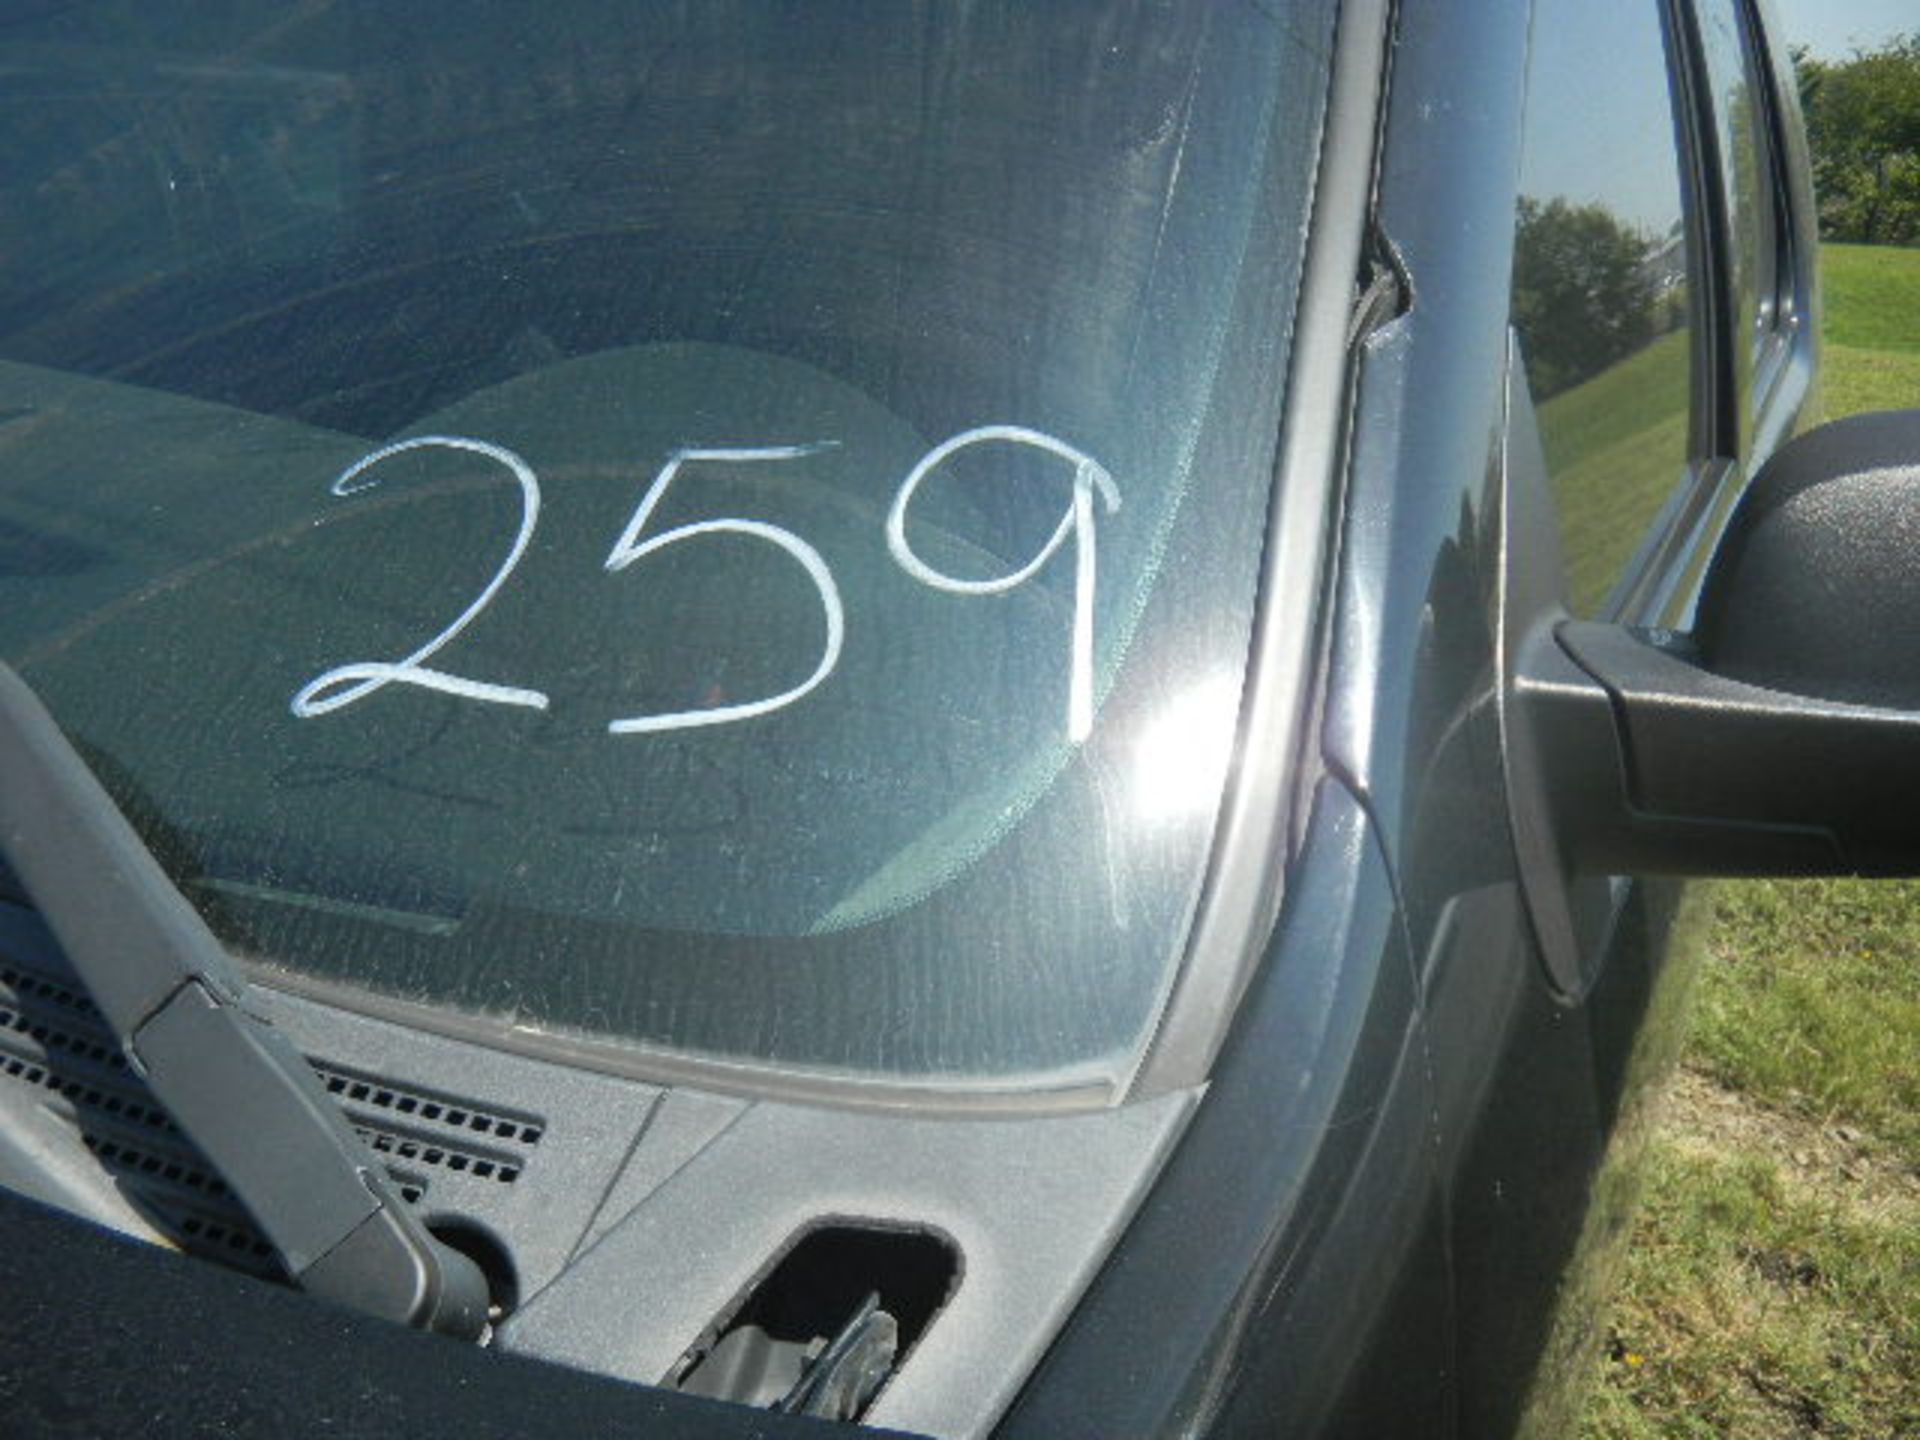 2010 Chevrolet Tahoe Black Patrol SUV - Asset I.D. #259 - Last of Vin (220846) - Image 8 of 9